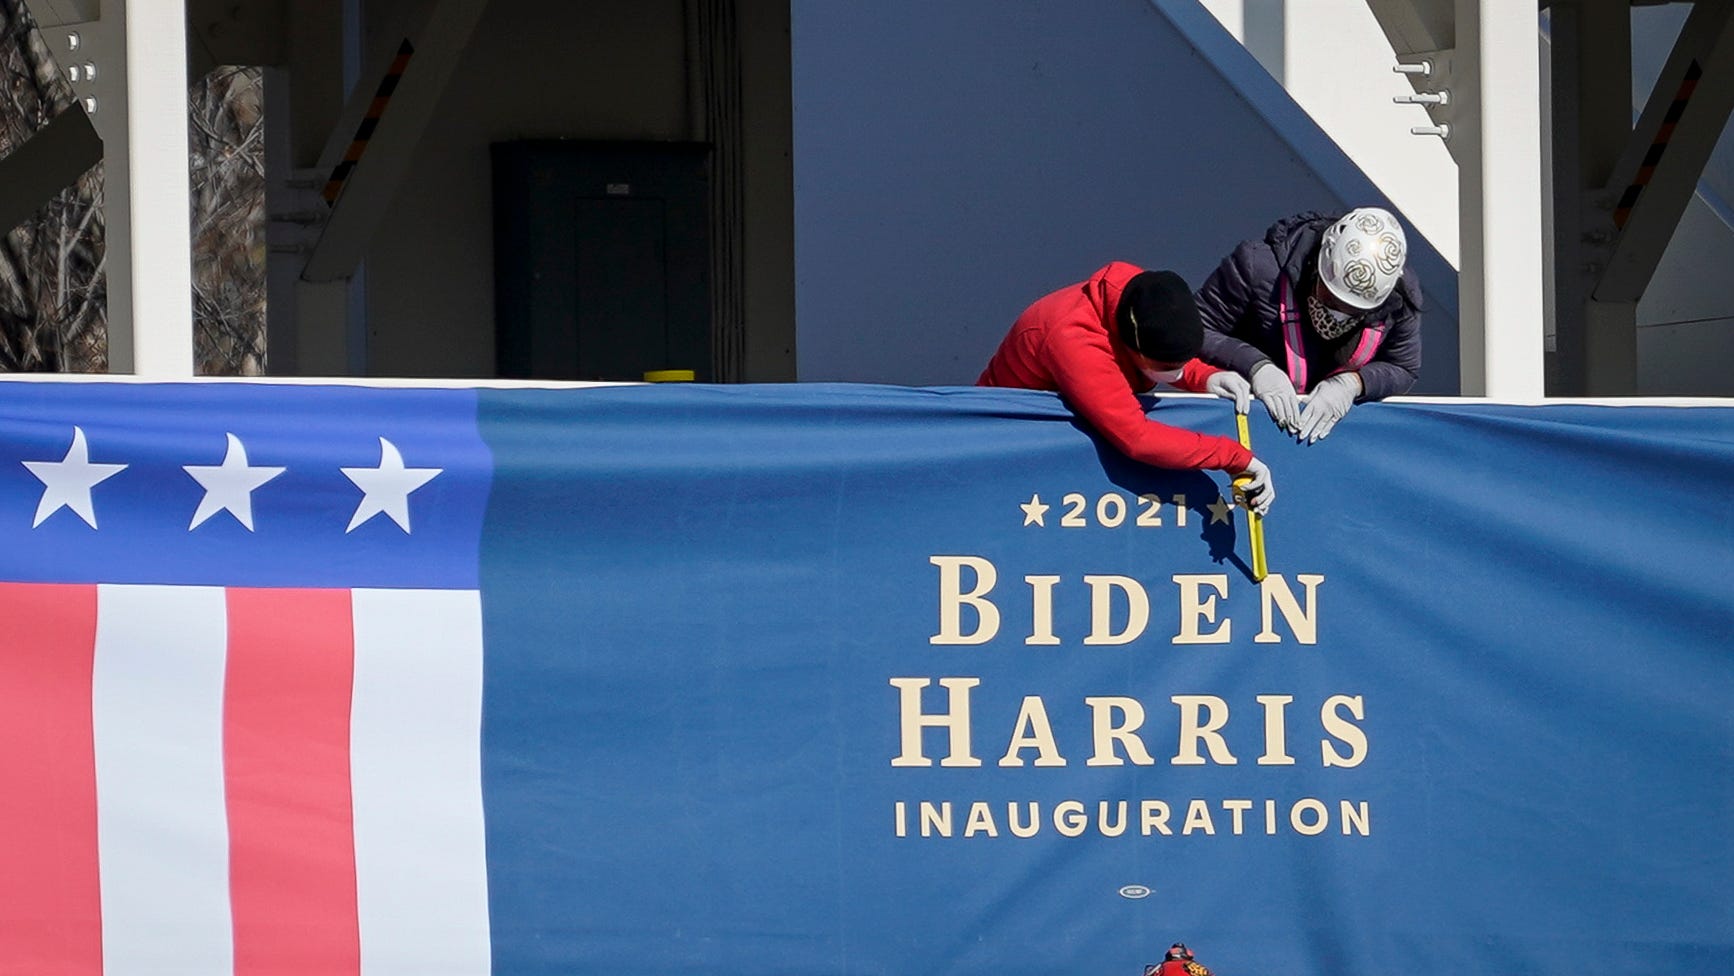 Inauguration Day schedule Joe Biden, Kamala Harris sworn in